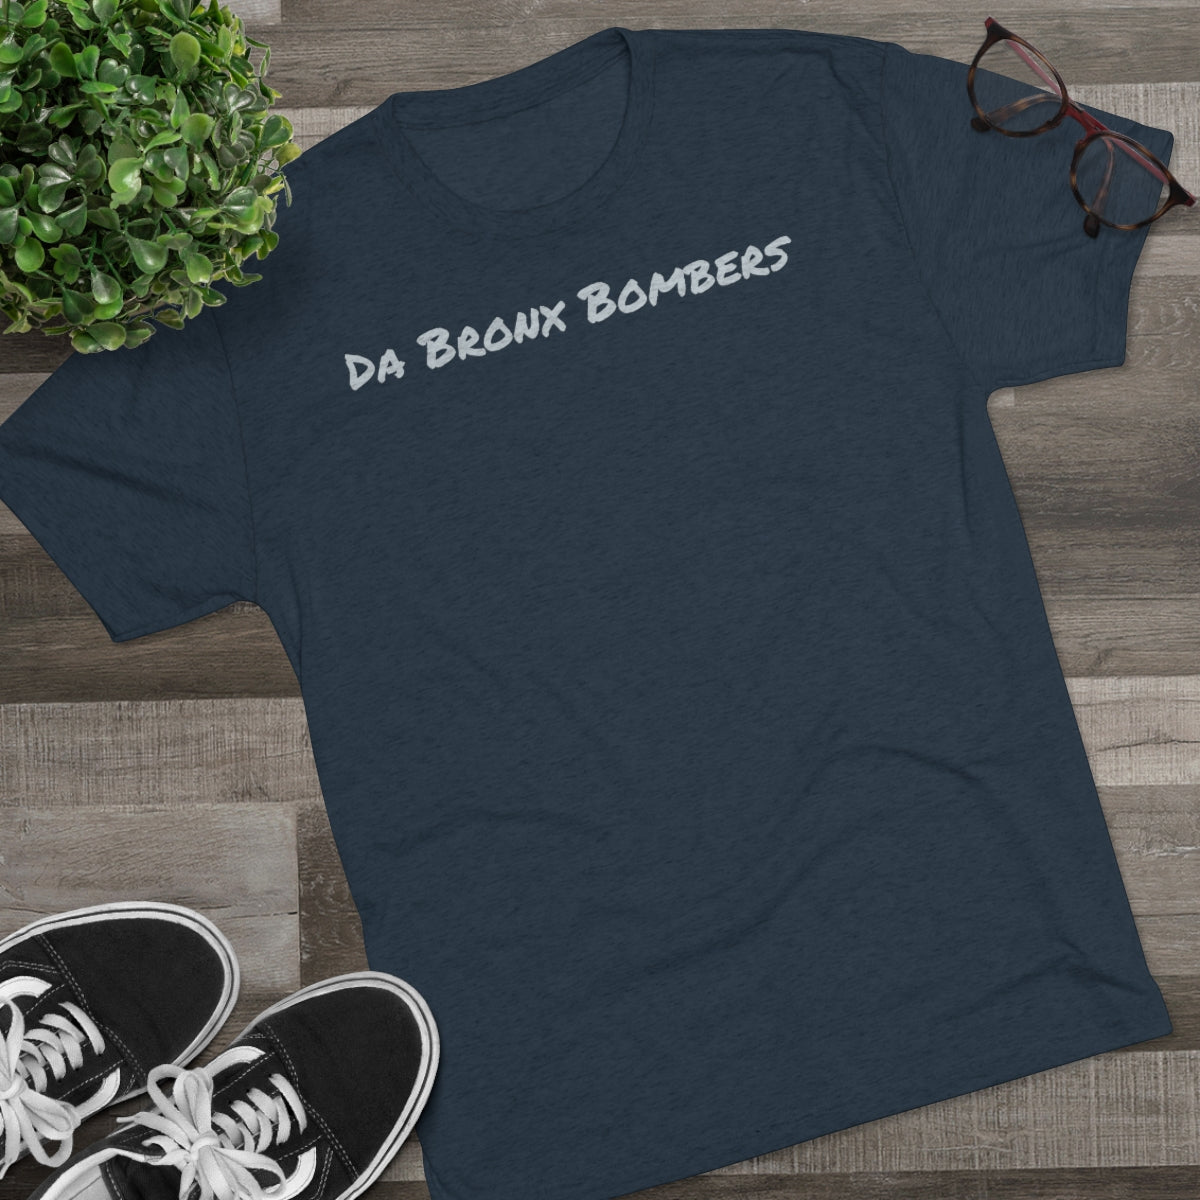 Da Bronx Bombers T-Shirt - IsGoodBrand